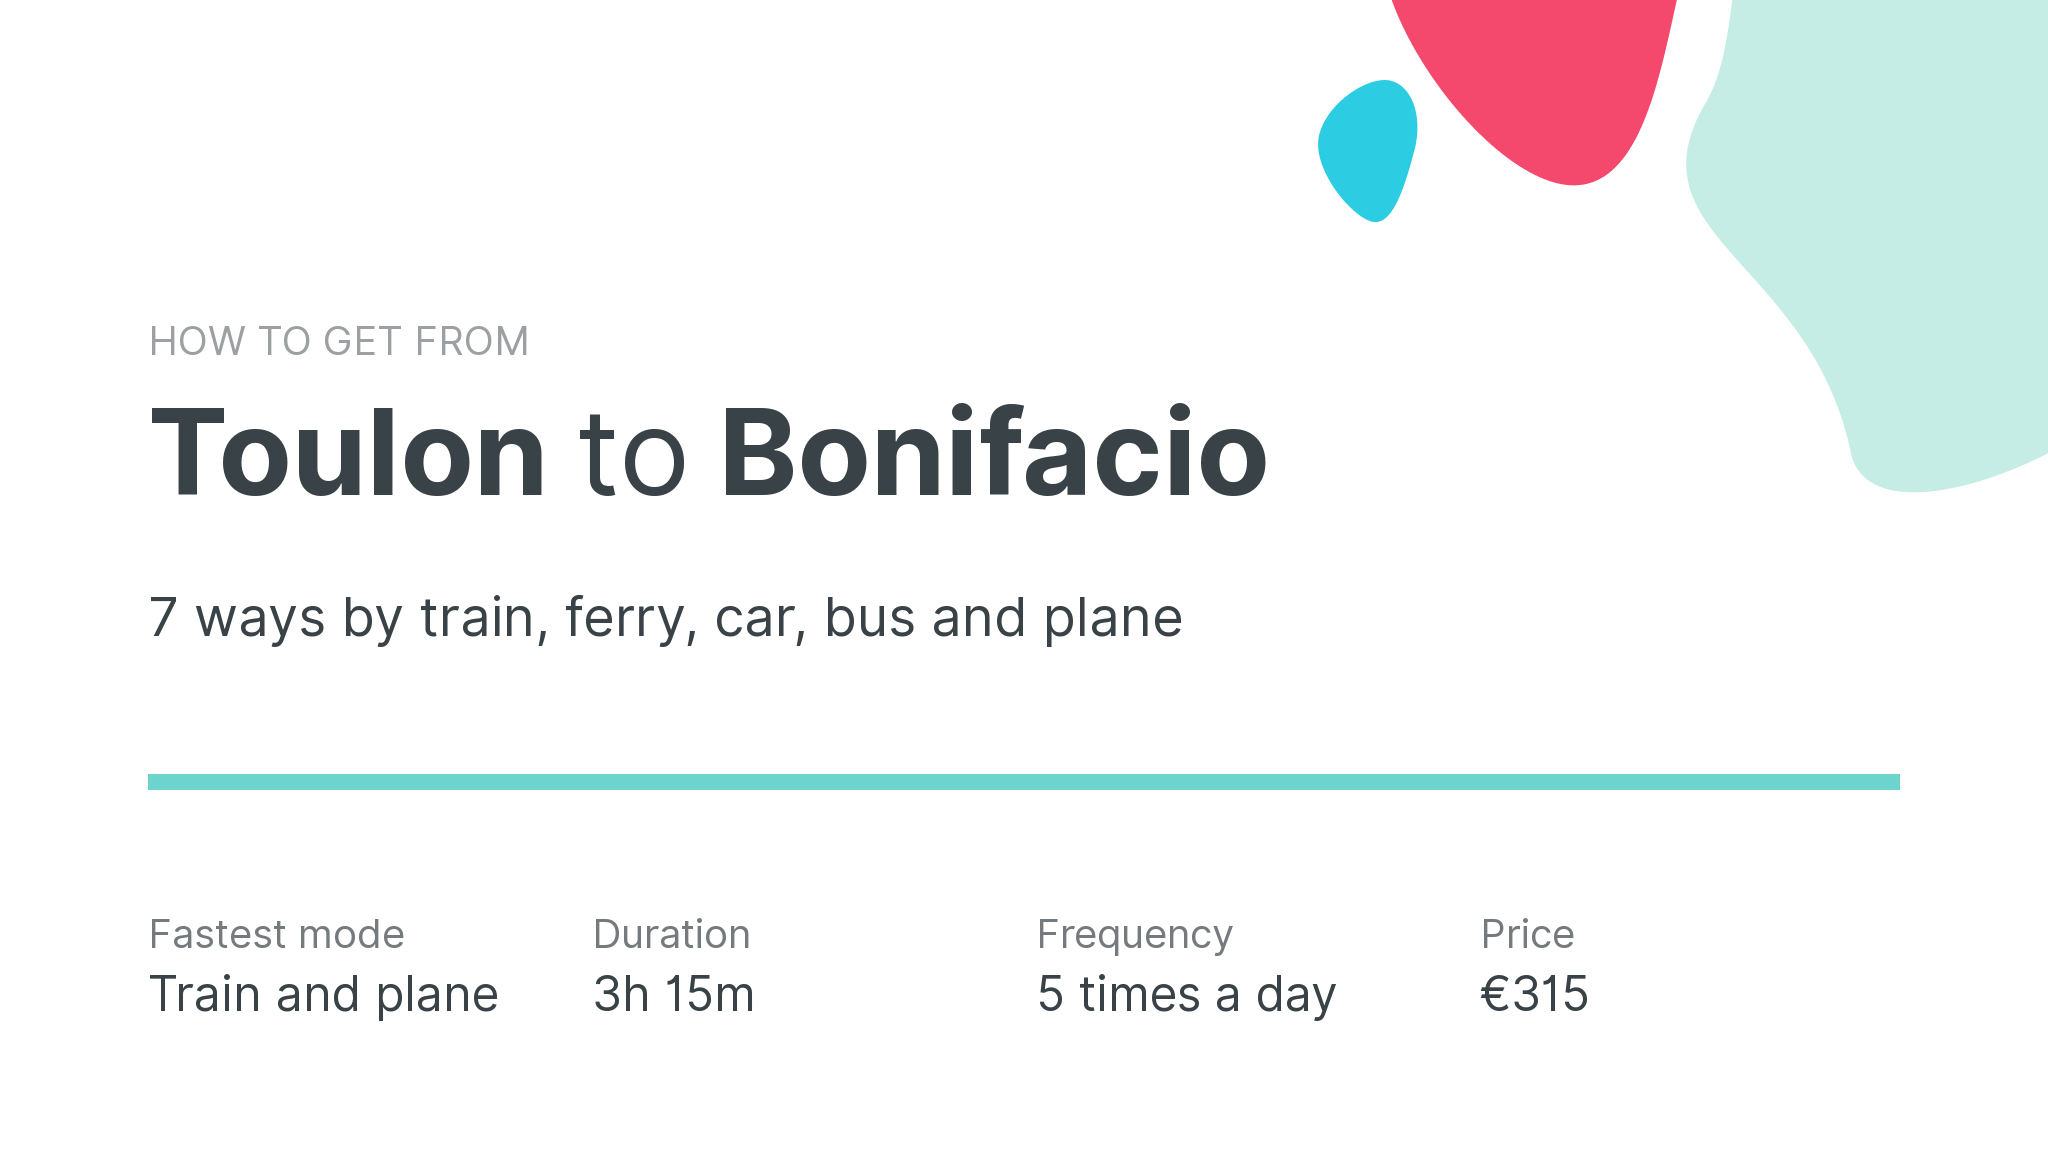 How do I get from Toulon to Bonifacio